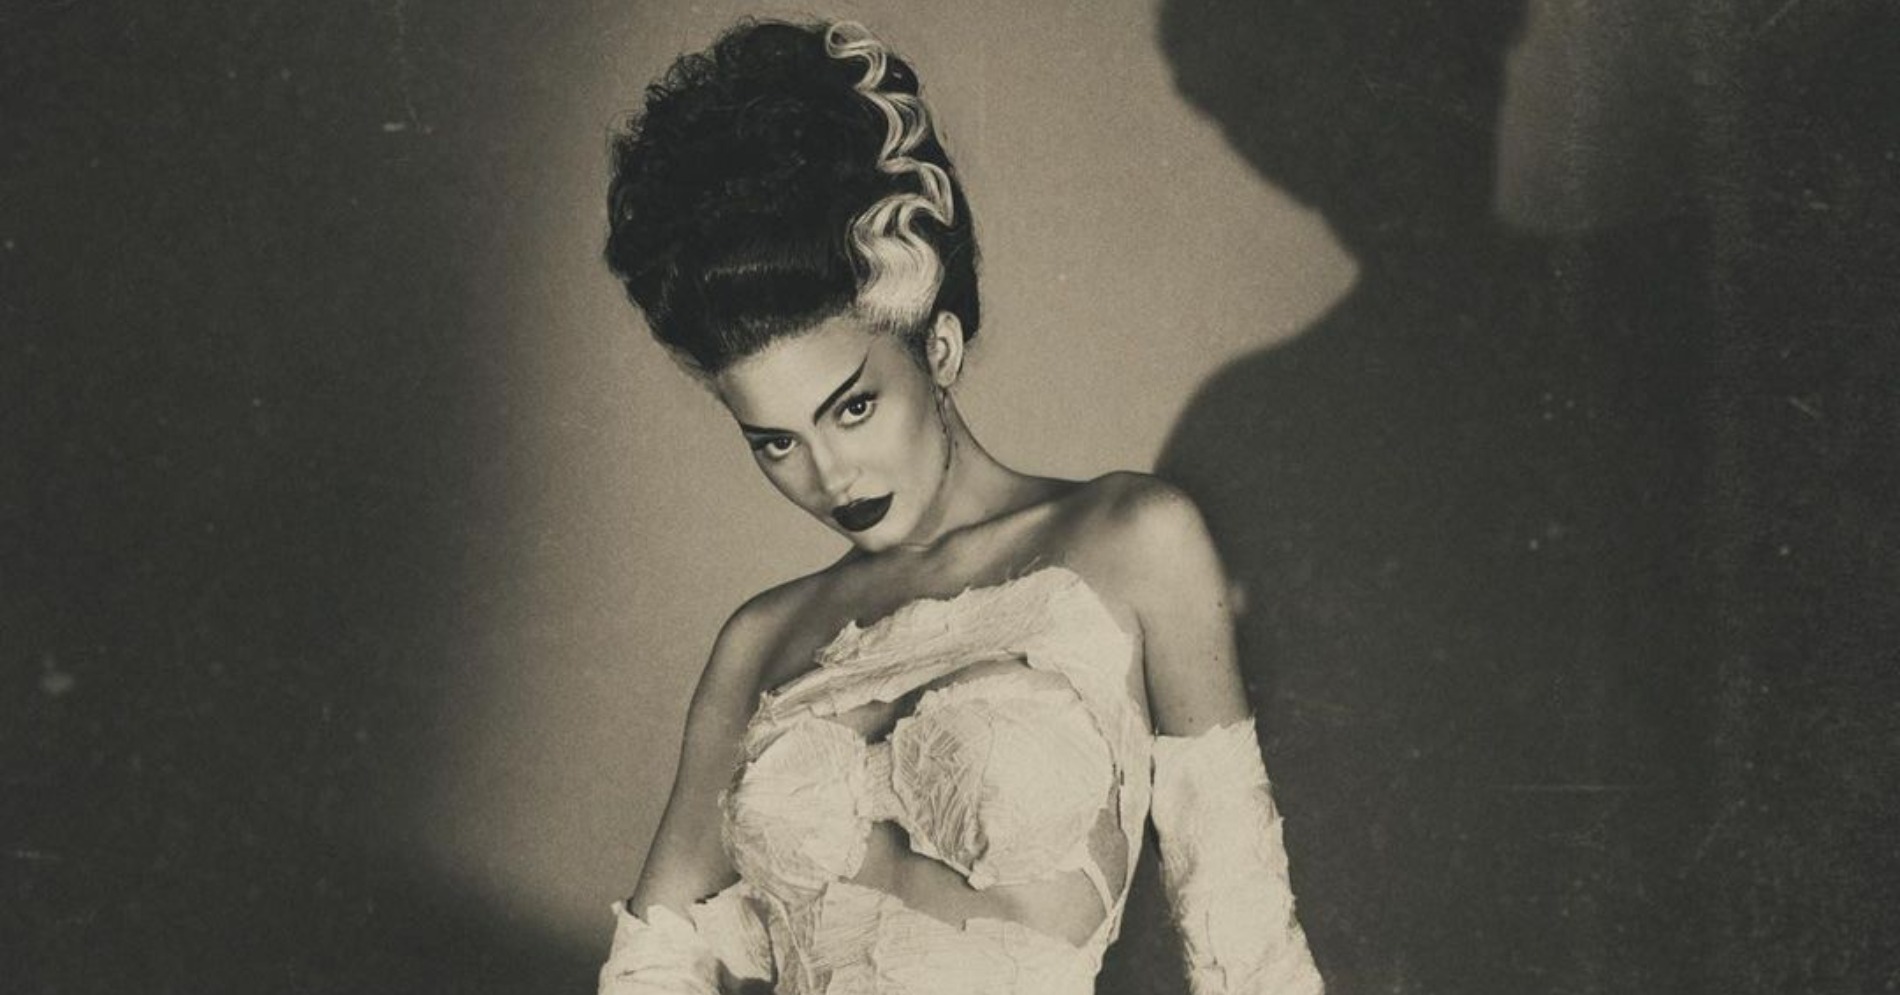 Kostum Bride of Frankenstein (Sumber gambar: Instagram.com/kyliejenner)